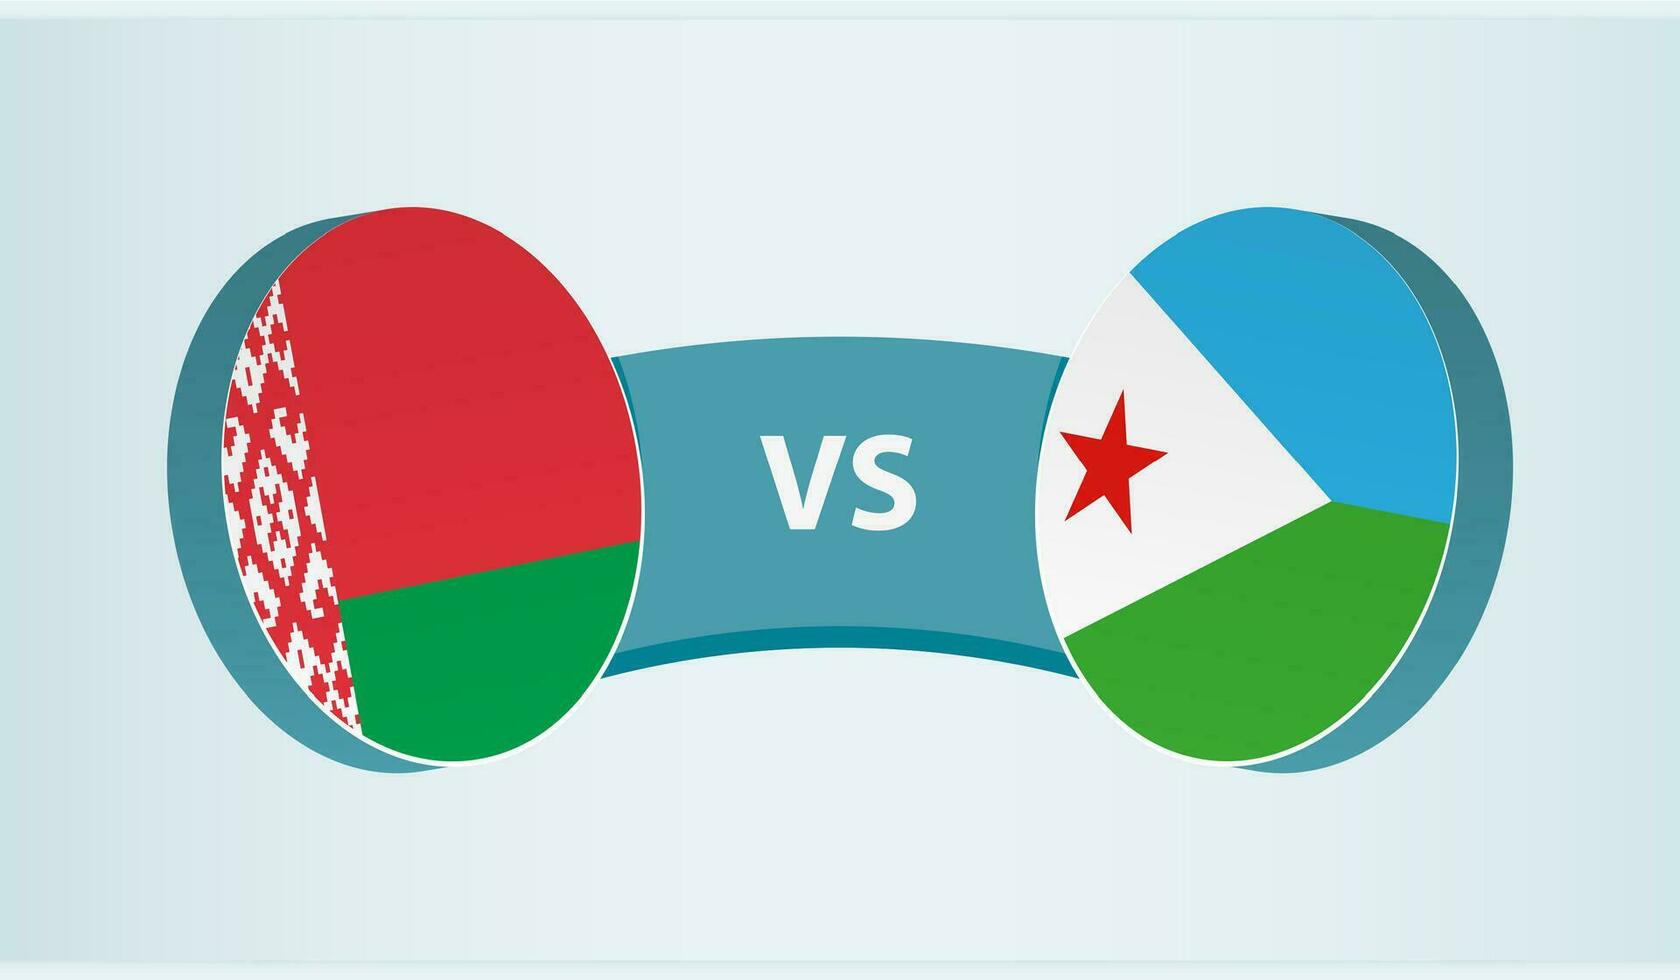 Belarus versus Djibouti, team sports competition concept. vector